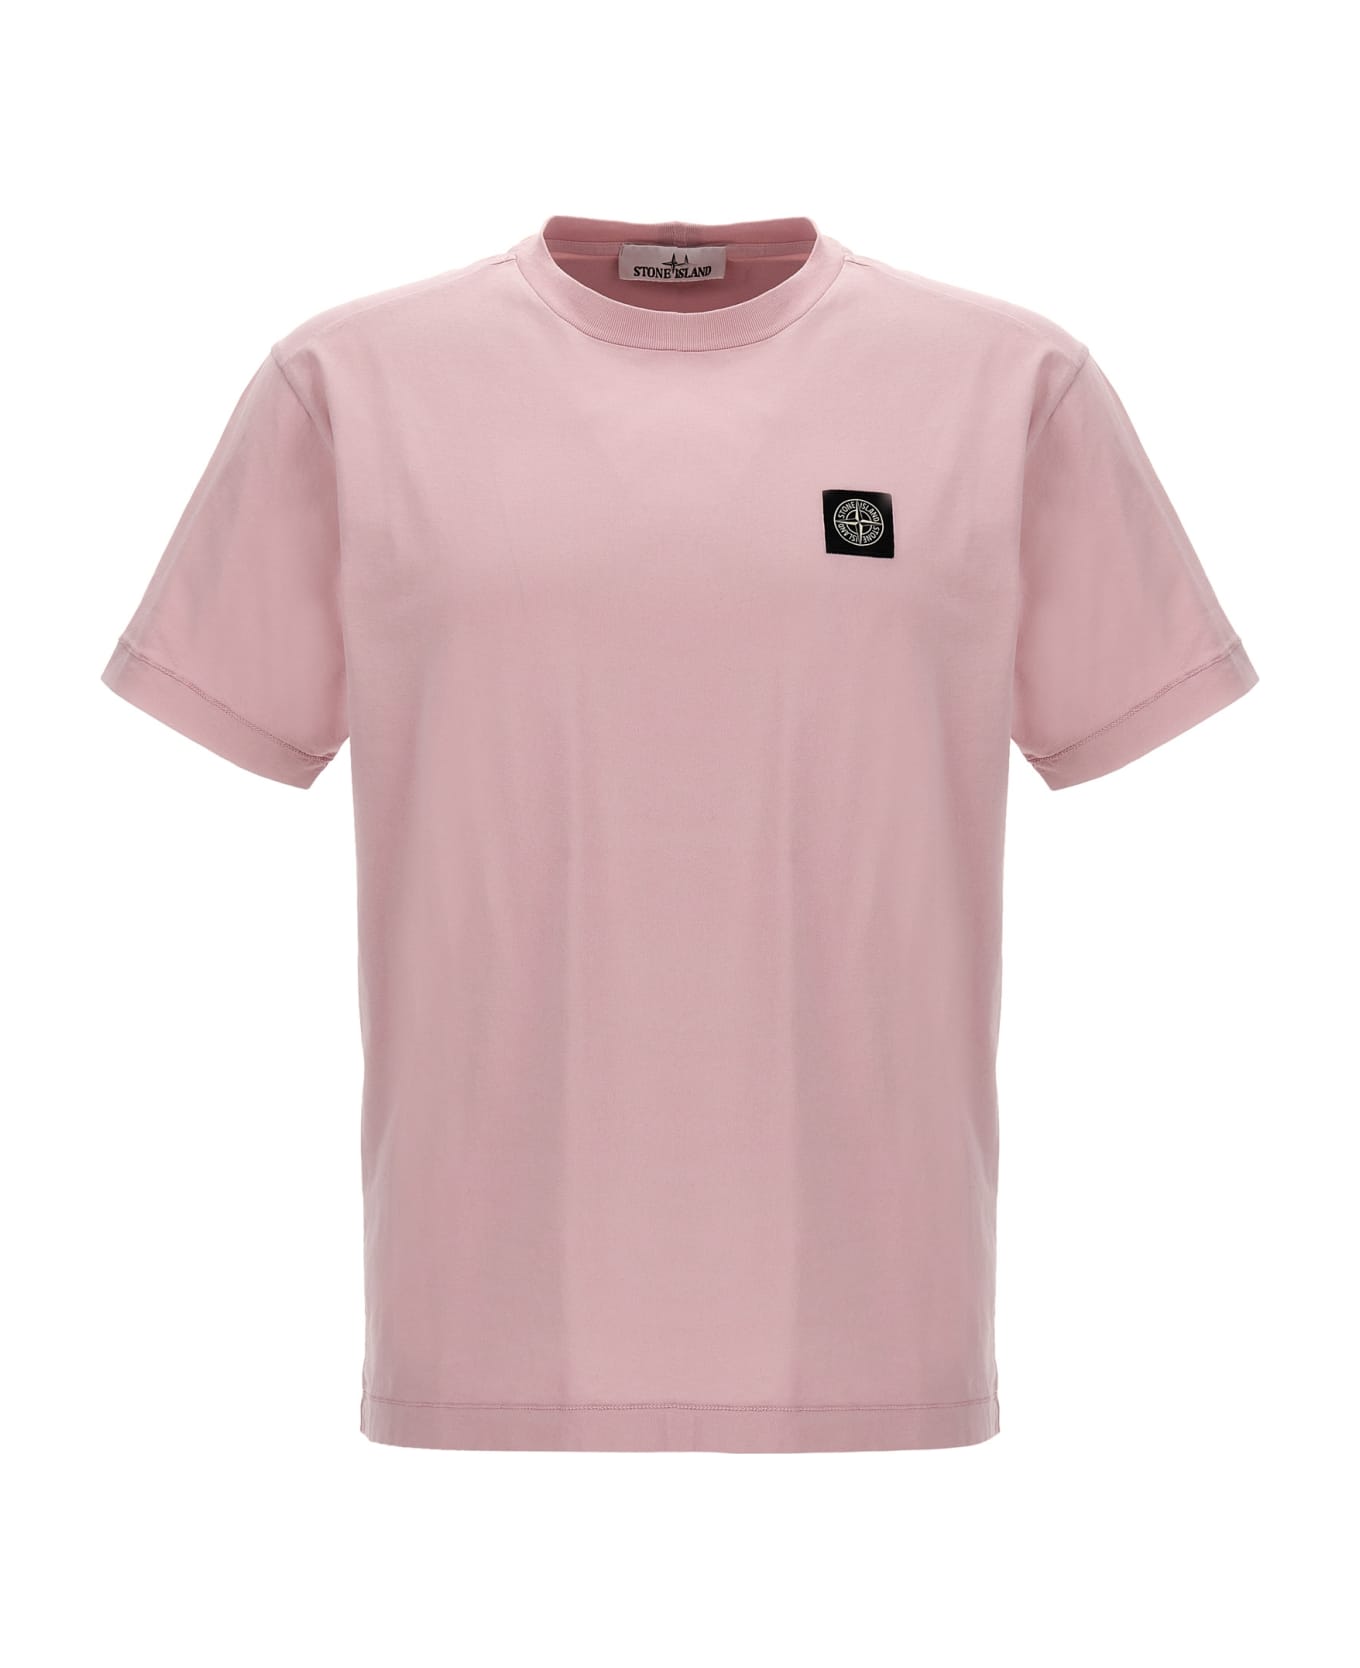 Stone Island Patch Tee T-shirt - Pink & Purple シャツ